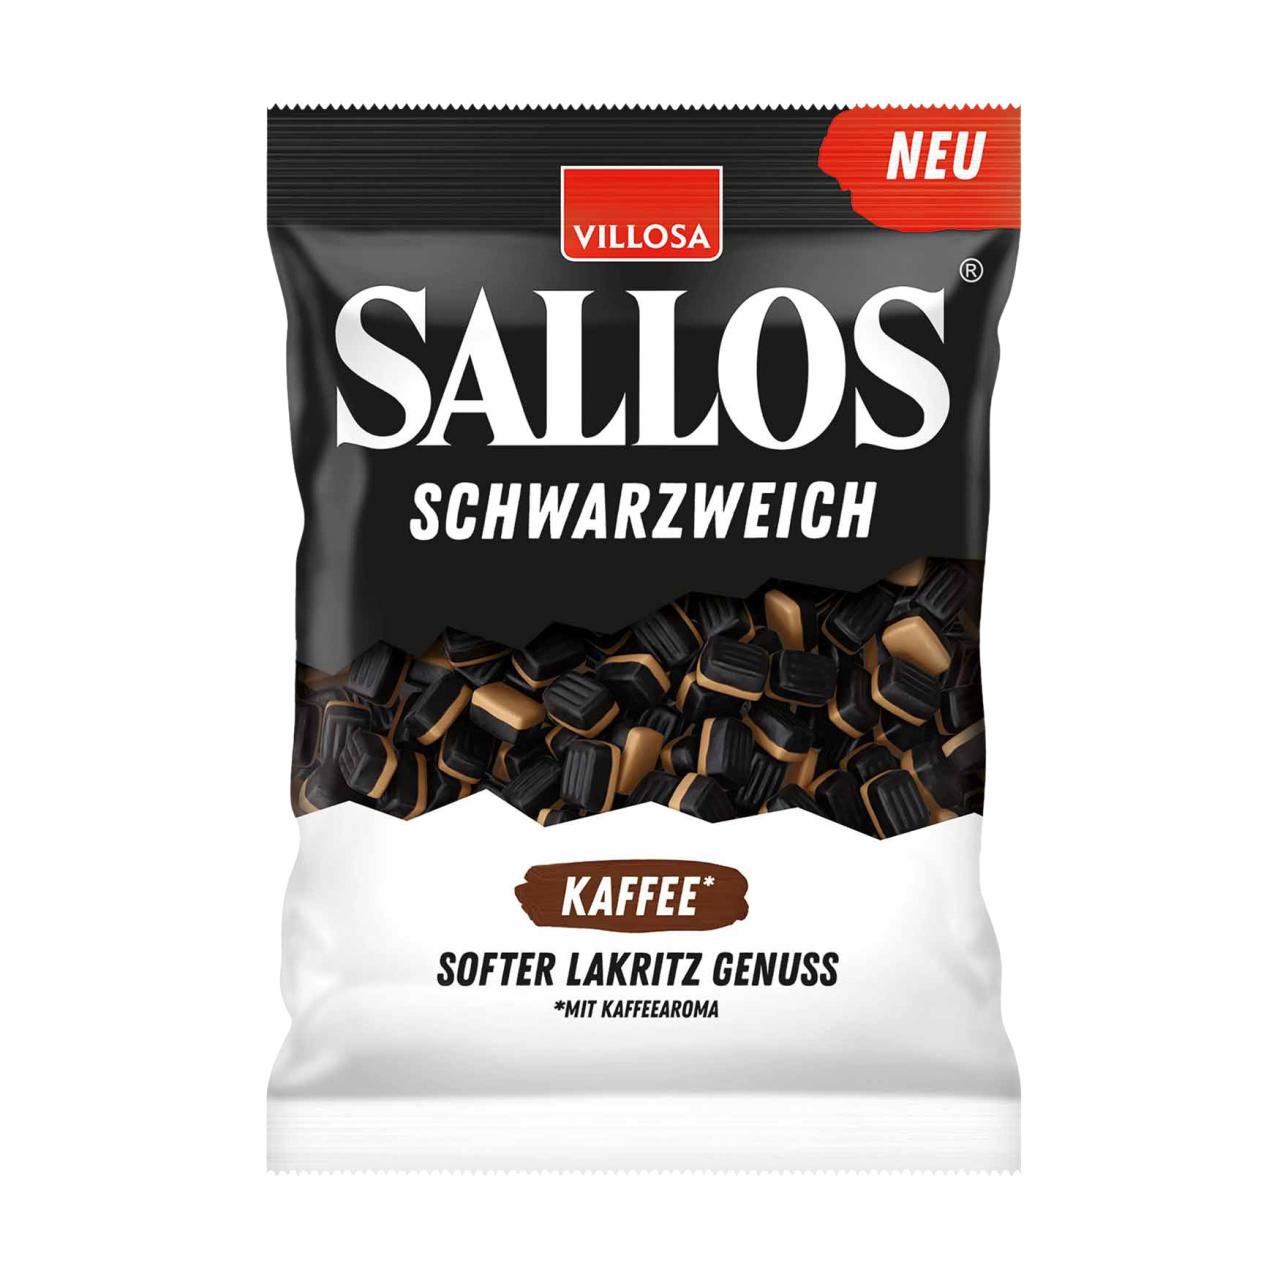 Sallos Schwarzweich Kaffee 200g